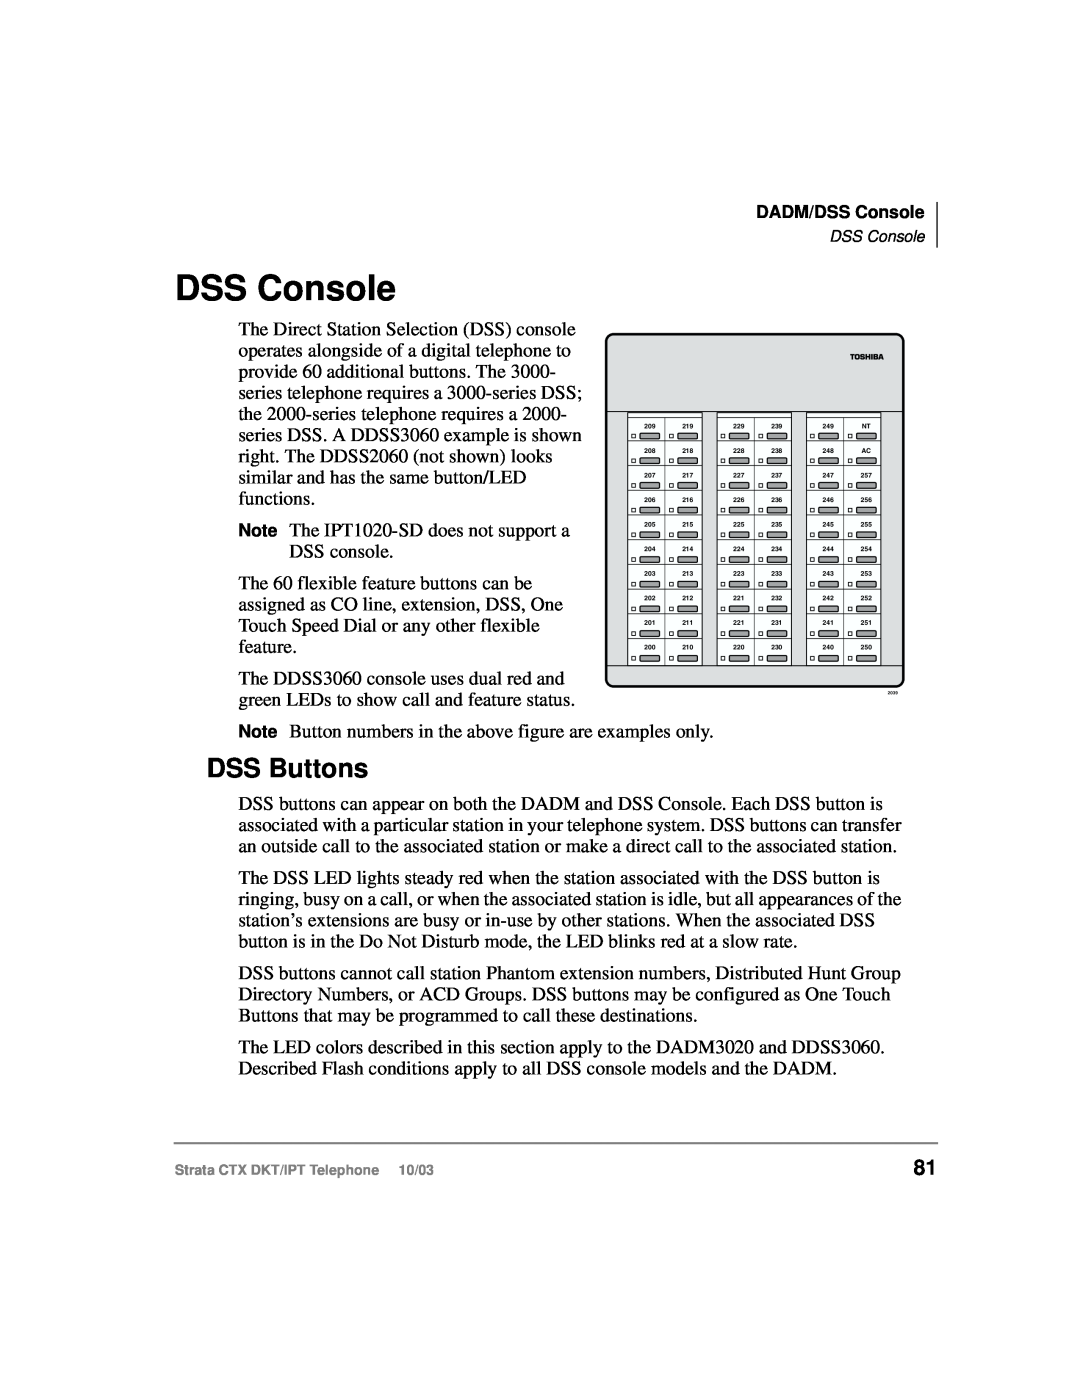 Toshiba DKT, IPT manual DSS Console, DSS Buttons 